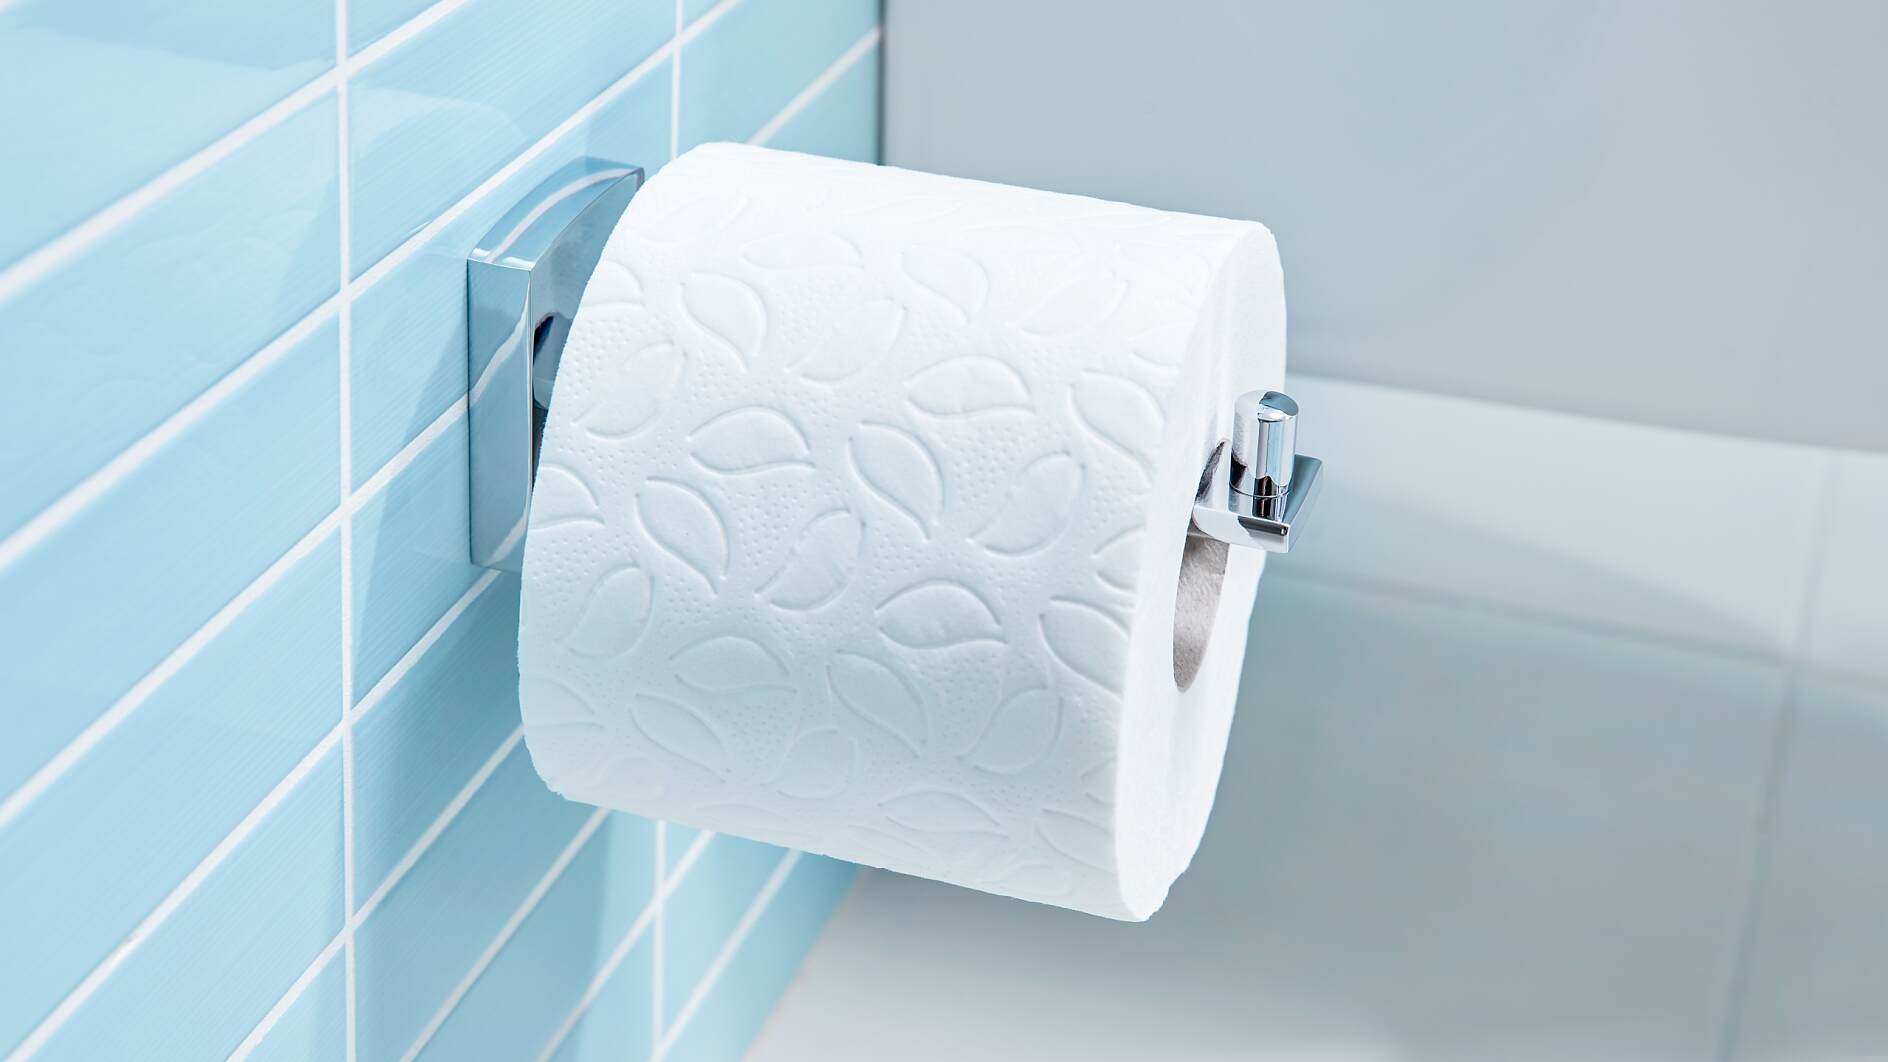 10 UNIQUE Toilet Paper Holder Designs That Your Bathroom Will